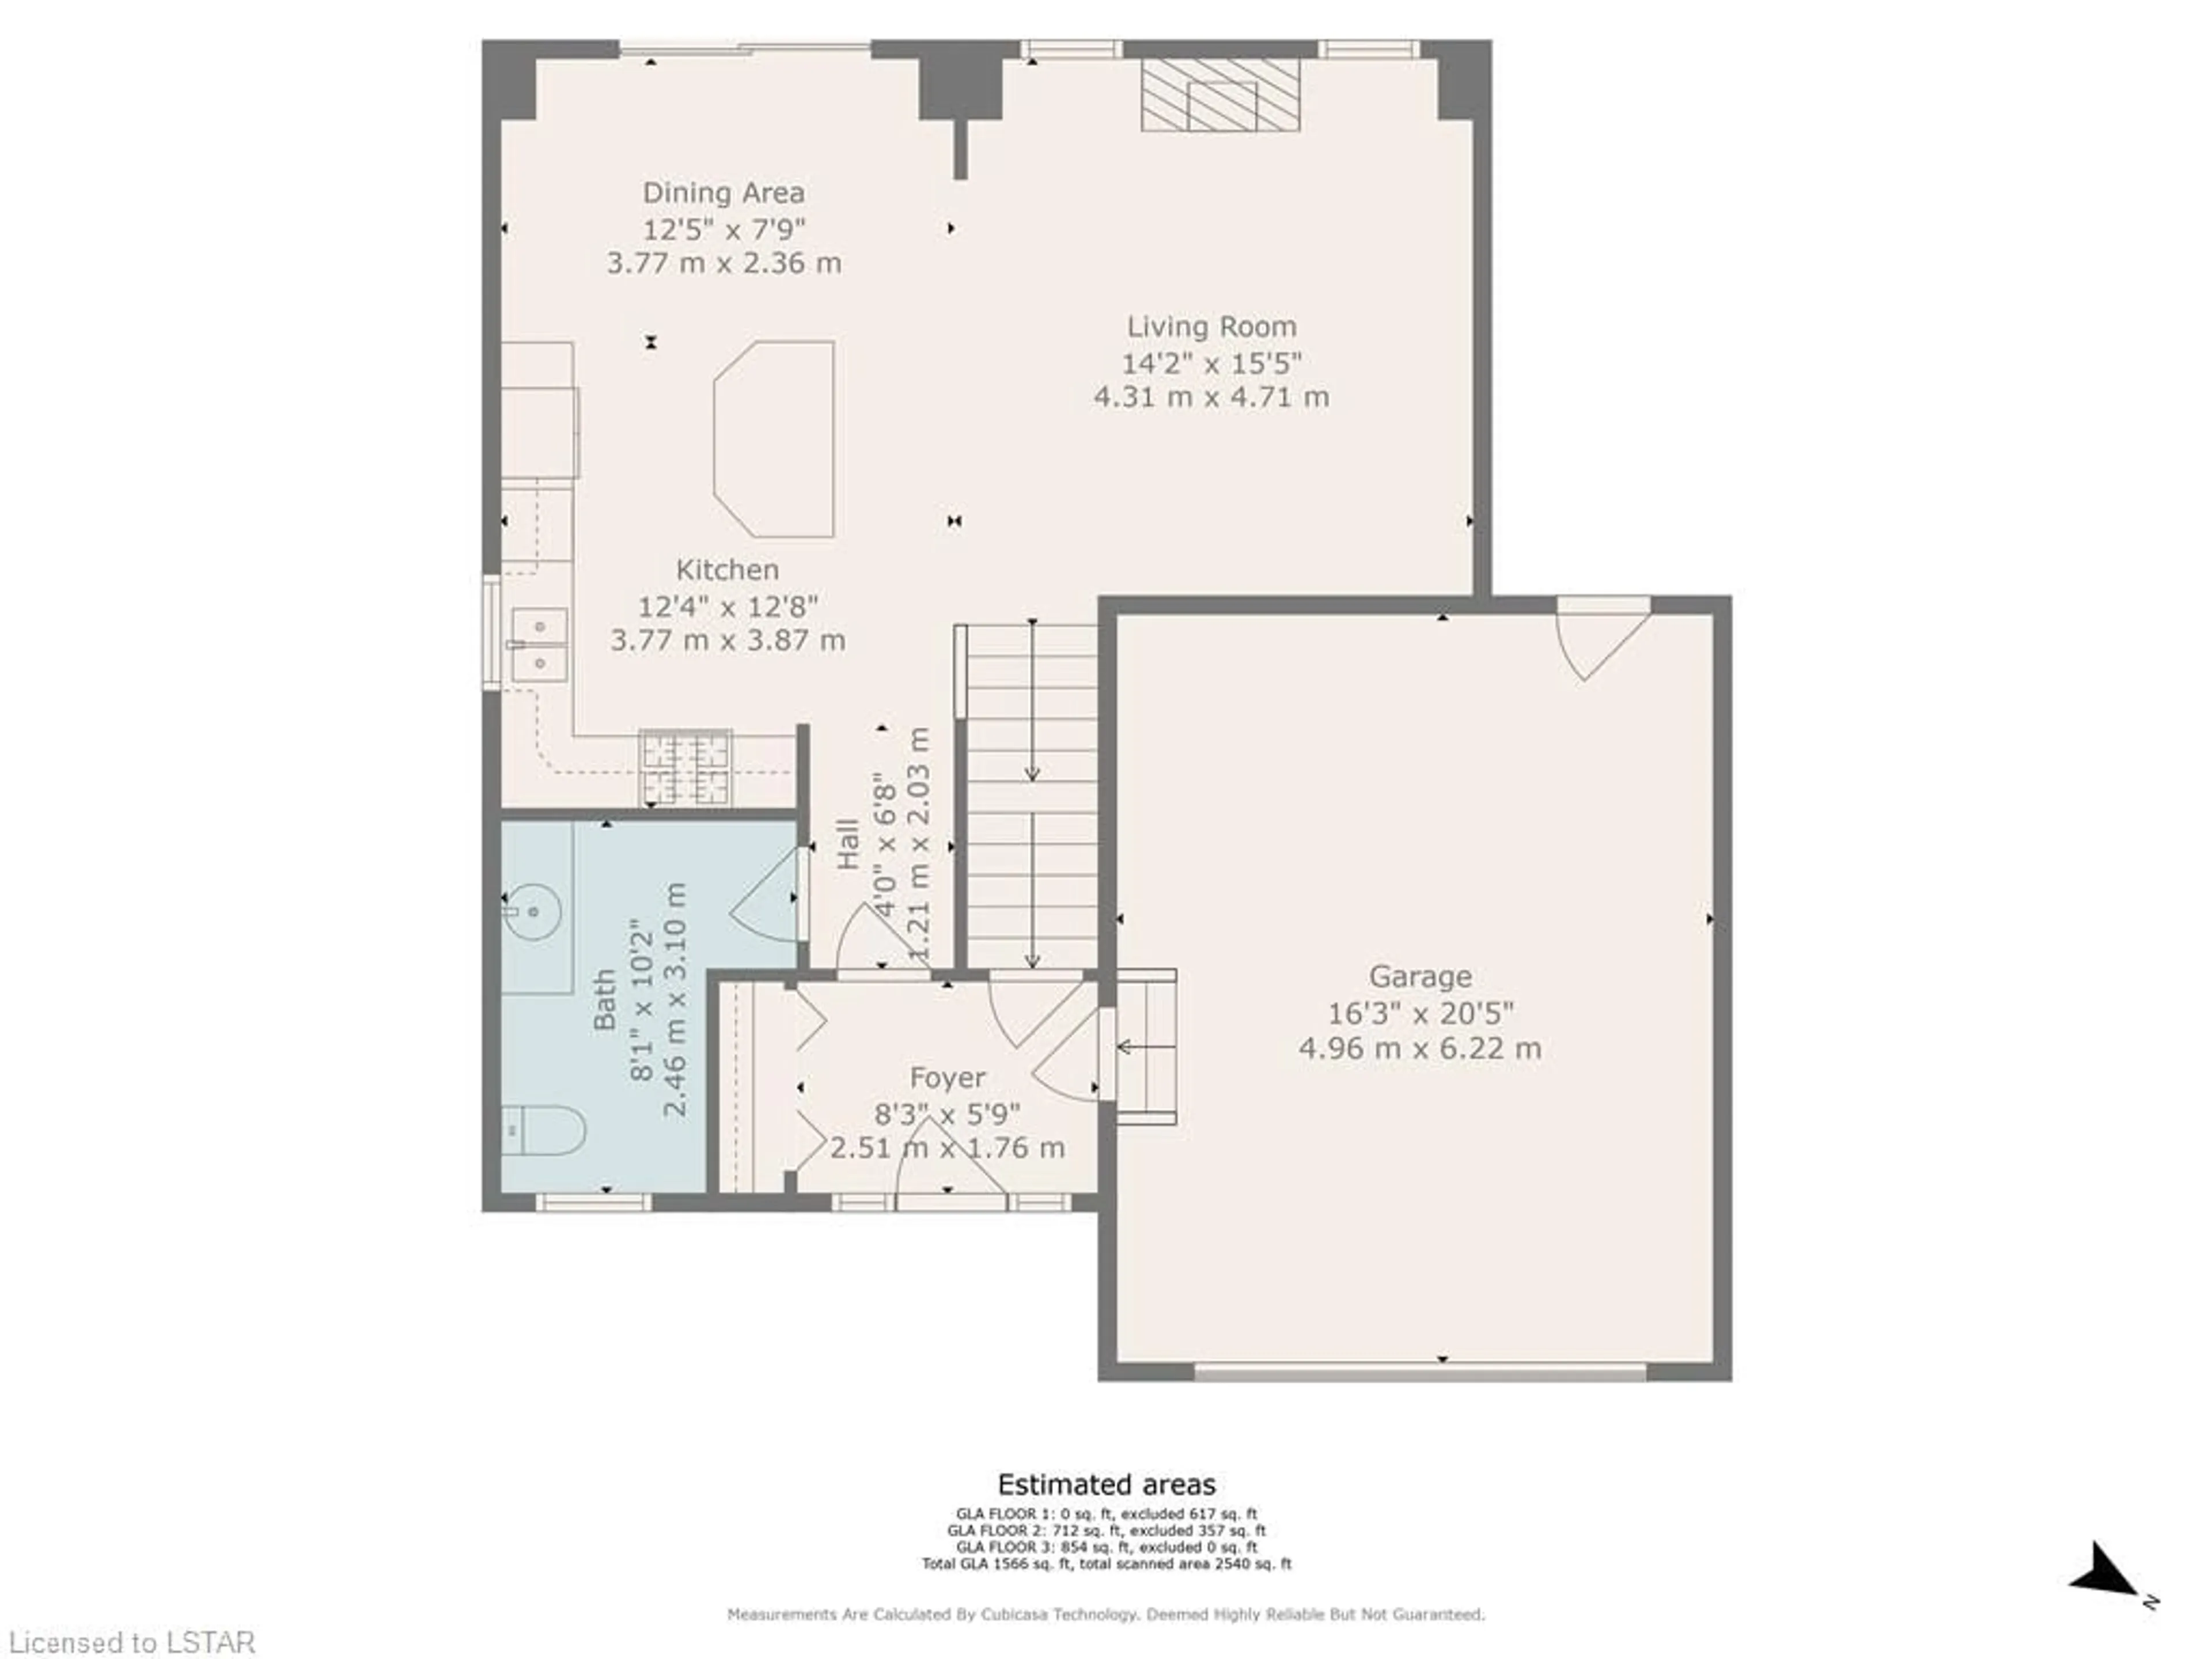 Floor plan for 42131 Mcbain Line, St. Thomas Ontario N5P 4R1